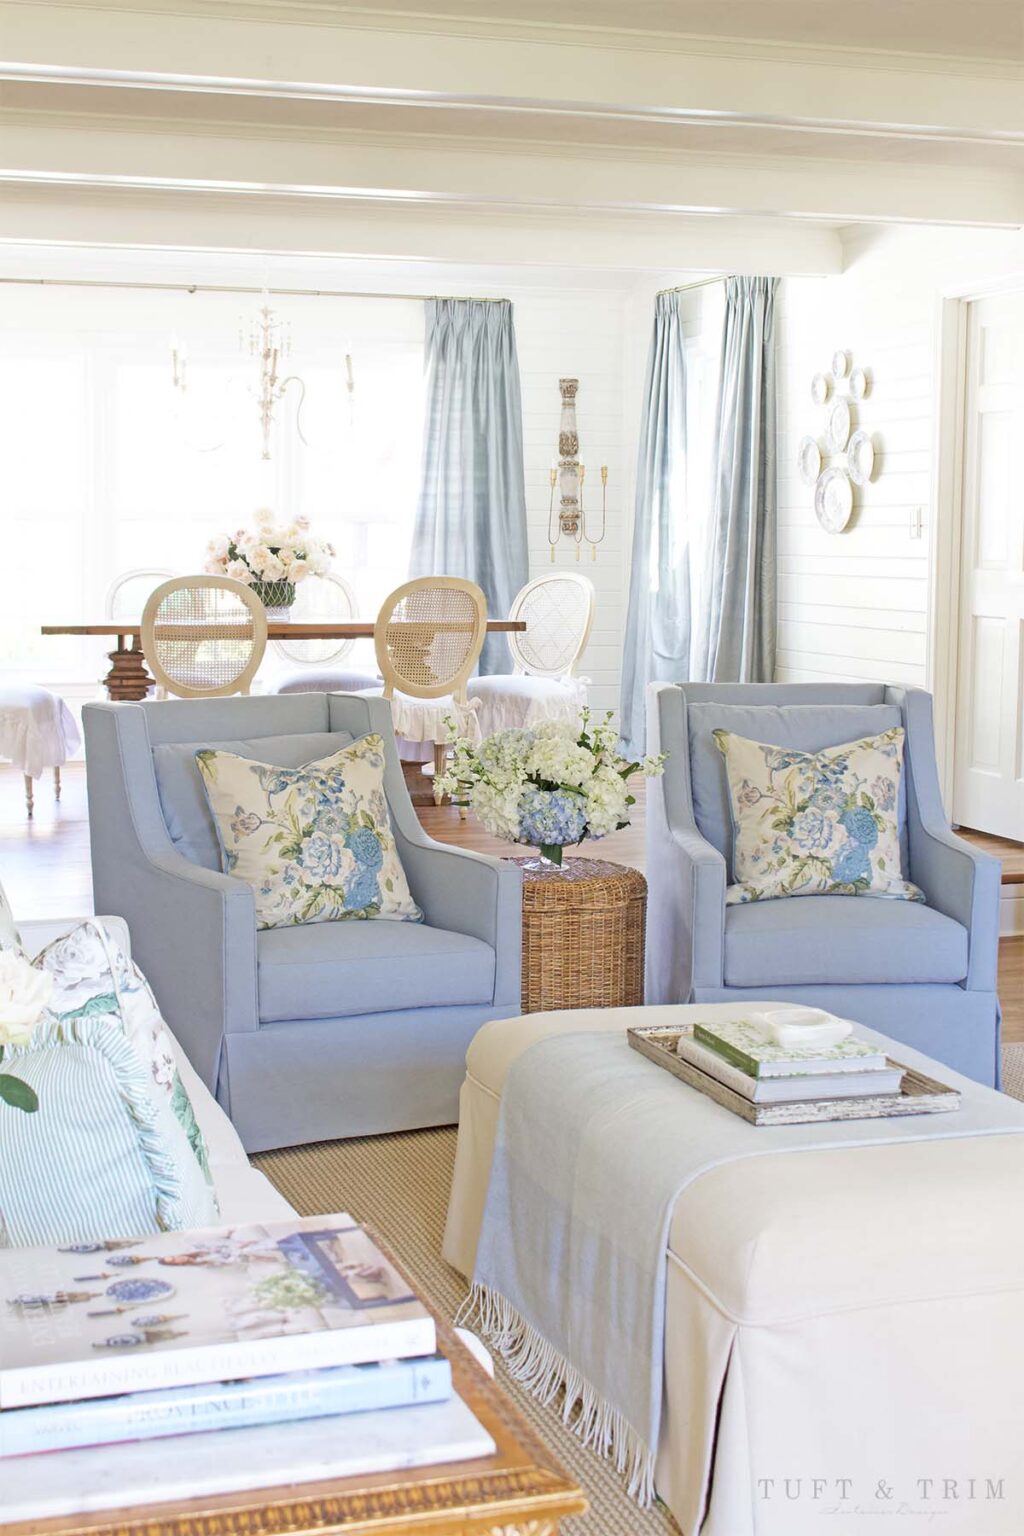 Creating an Elegant & Cozy Living Room - Tuft & Trim